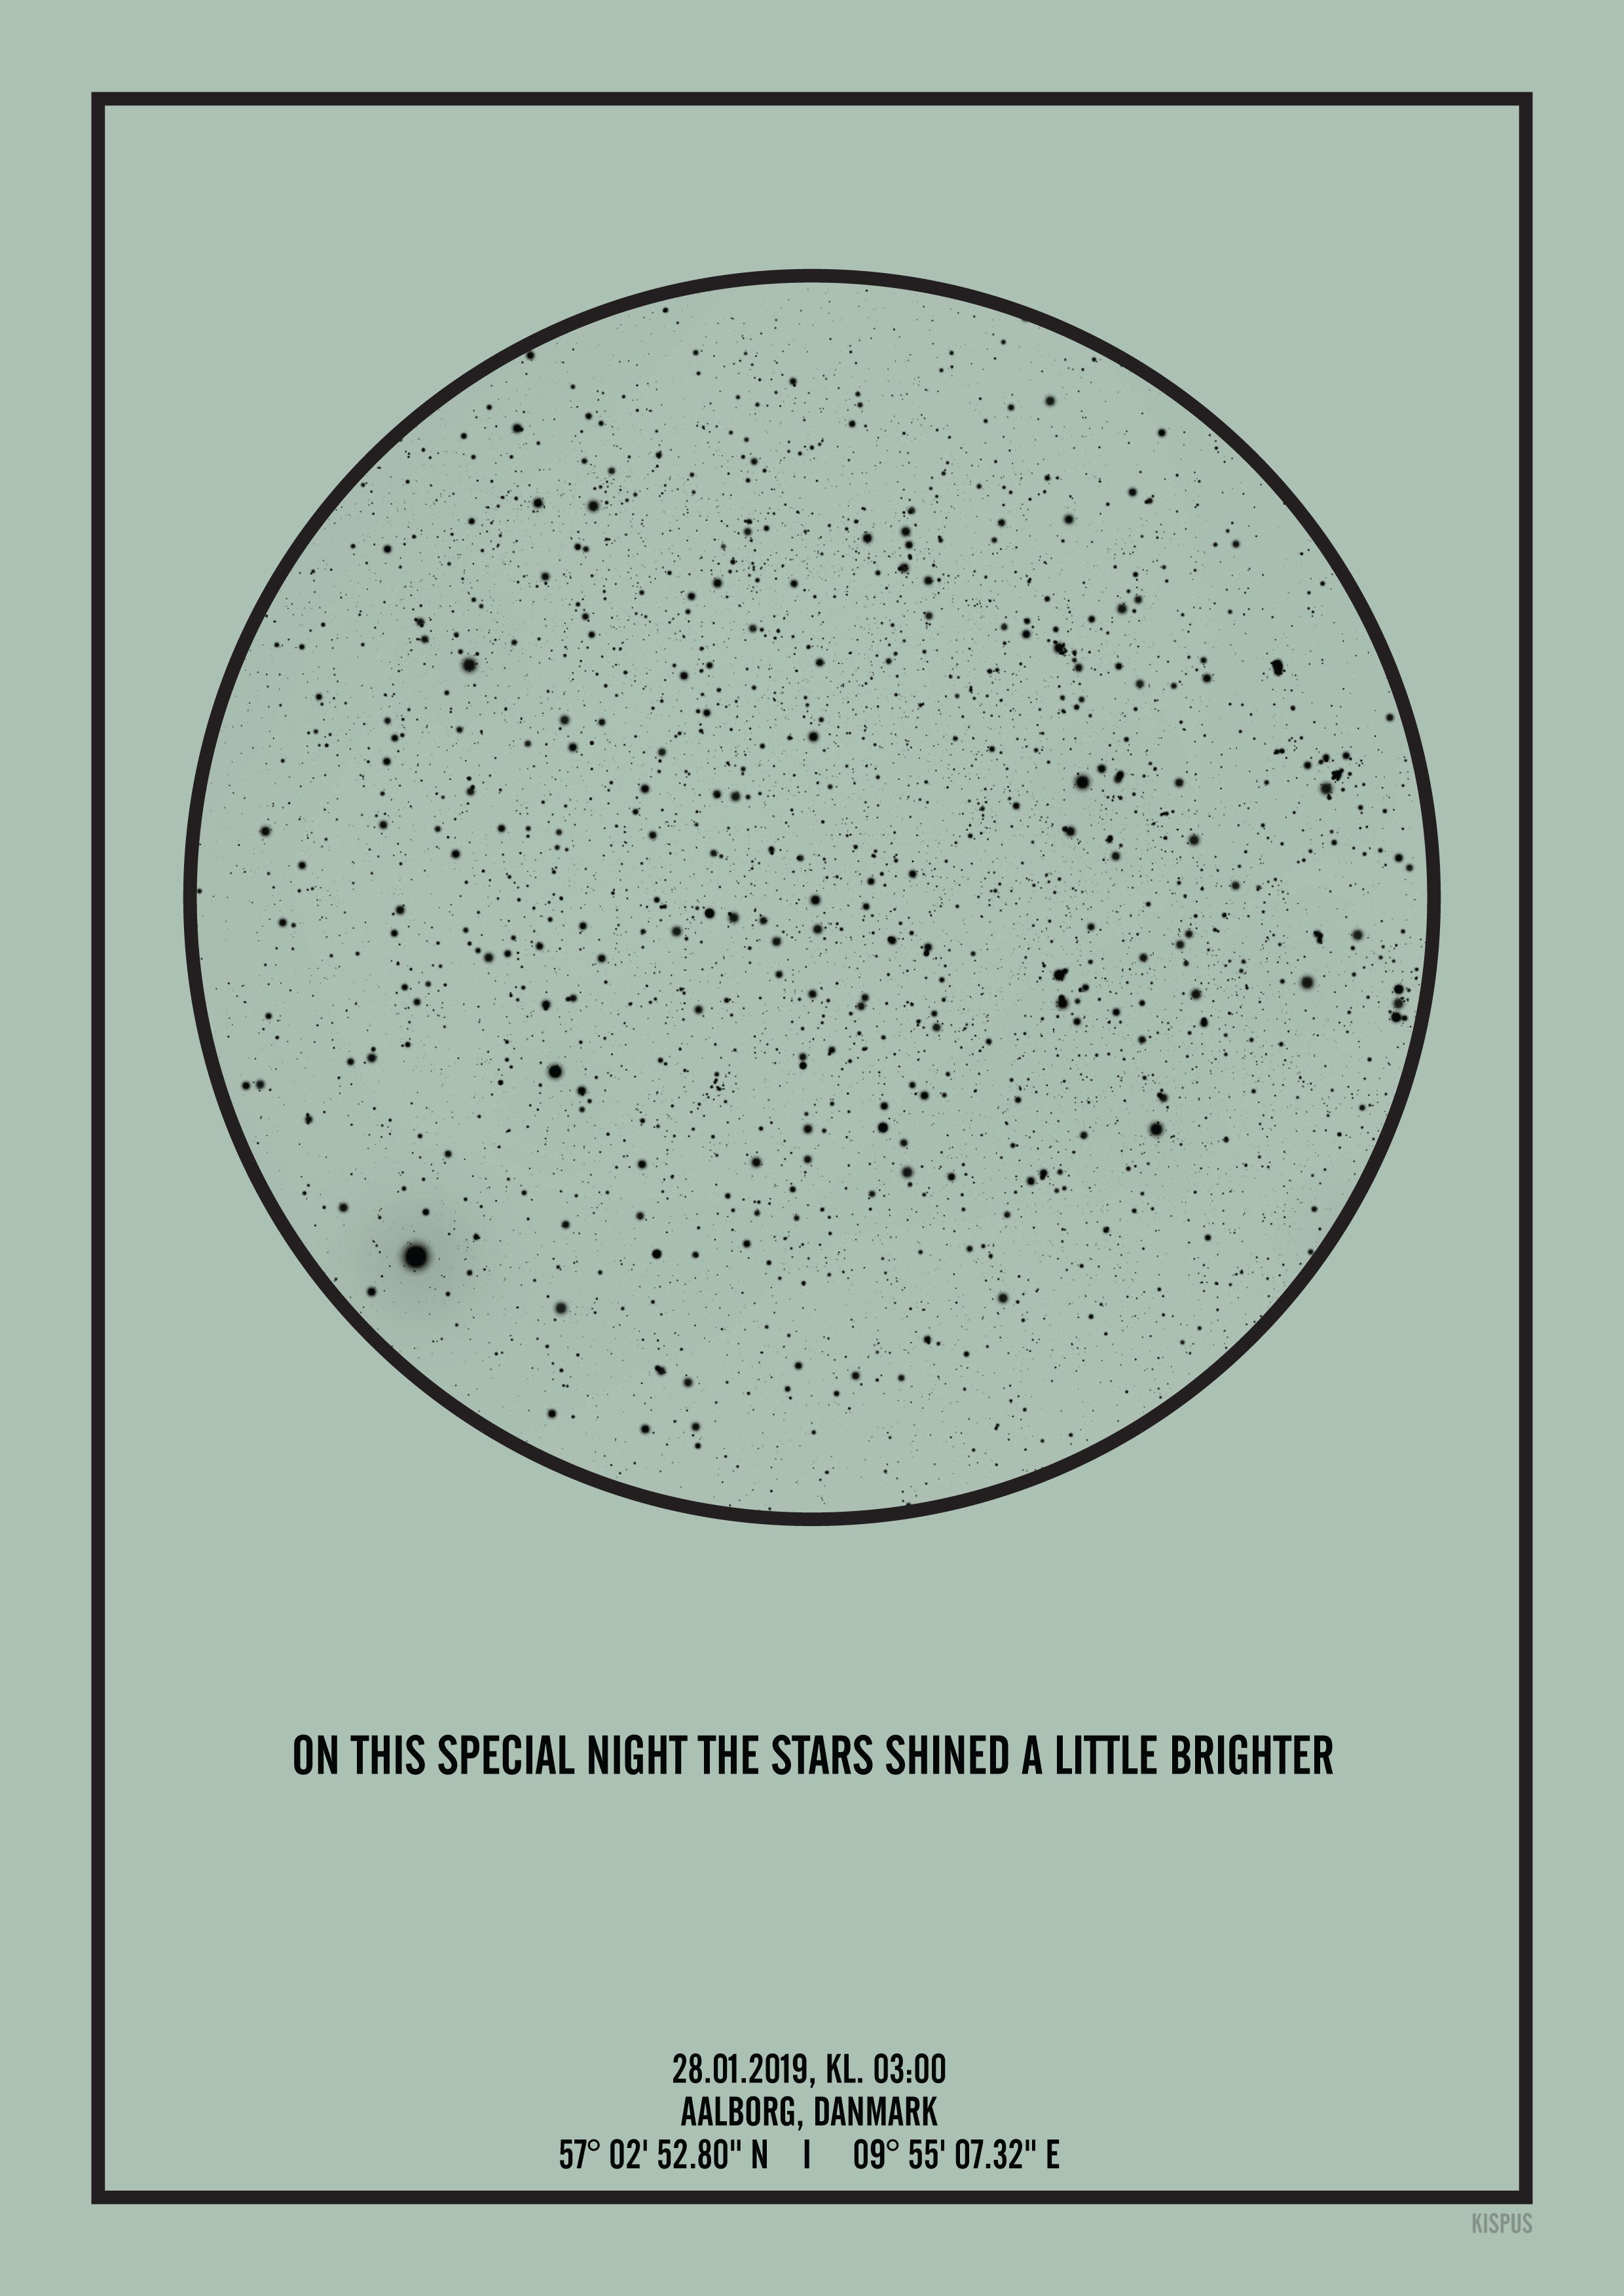 Se PERSONLIG STJERNEHIMMEL PLAKAT (LYSEGRØN) - 50x70 / Sort tekst + lysegrøn stjernehimmel / Klar stjernehimmel hos KISPUS